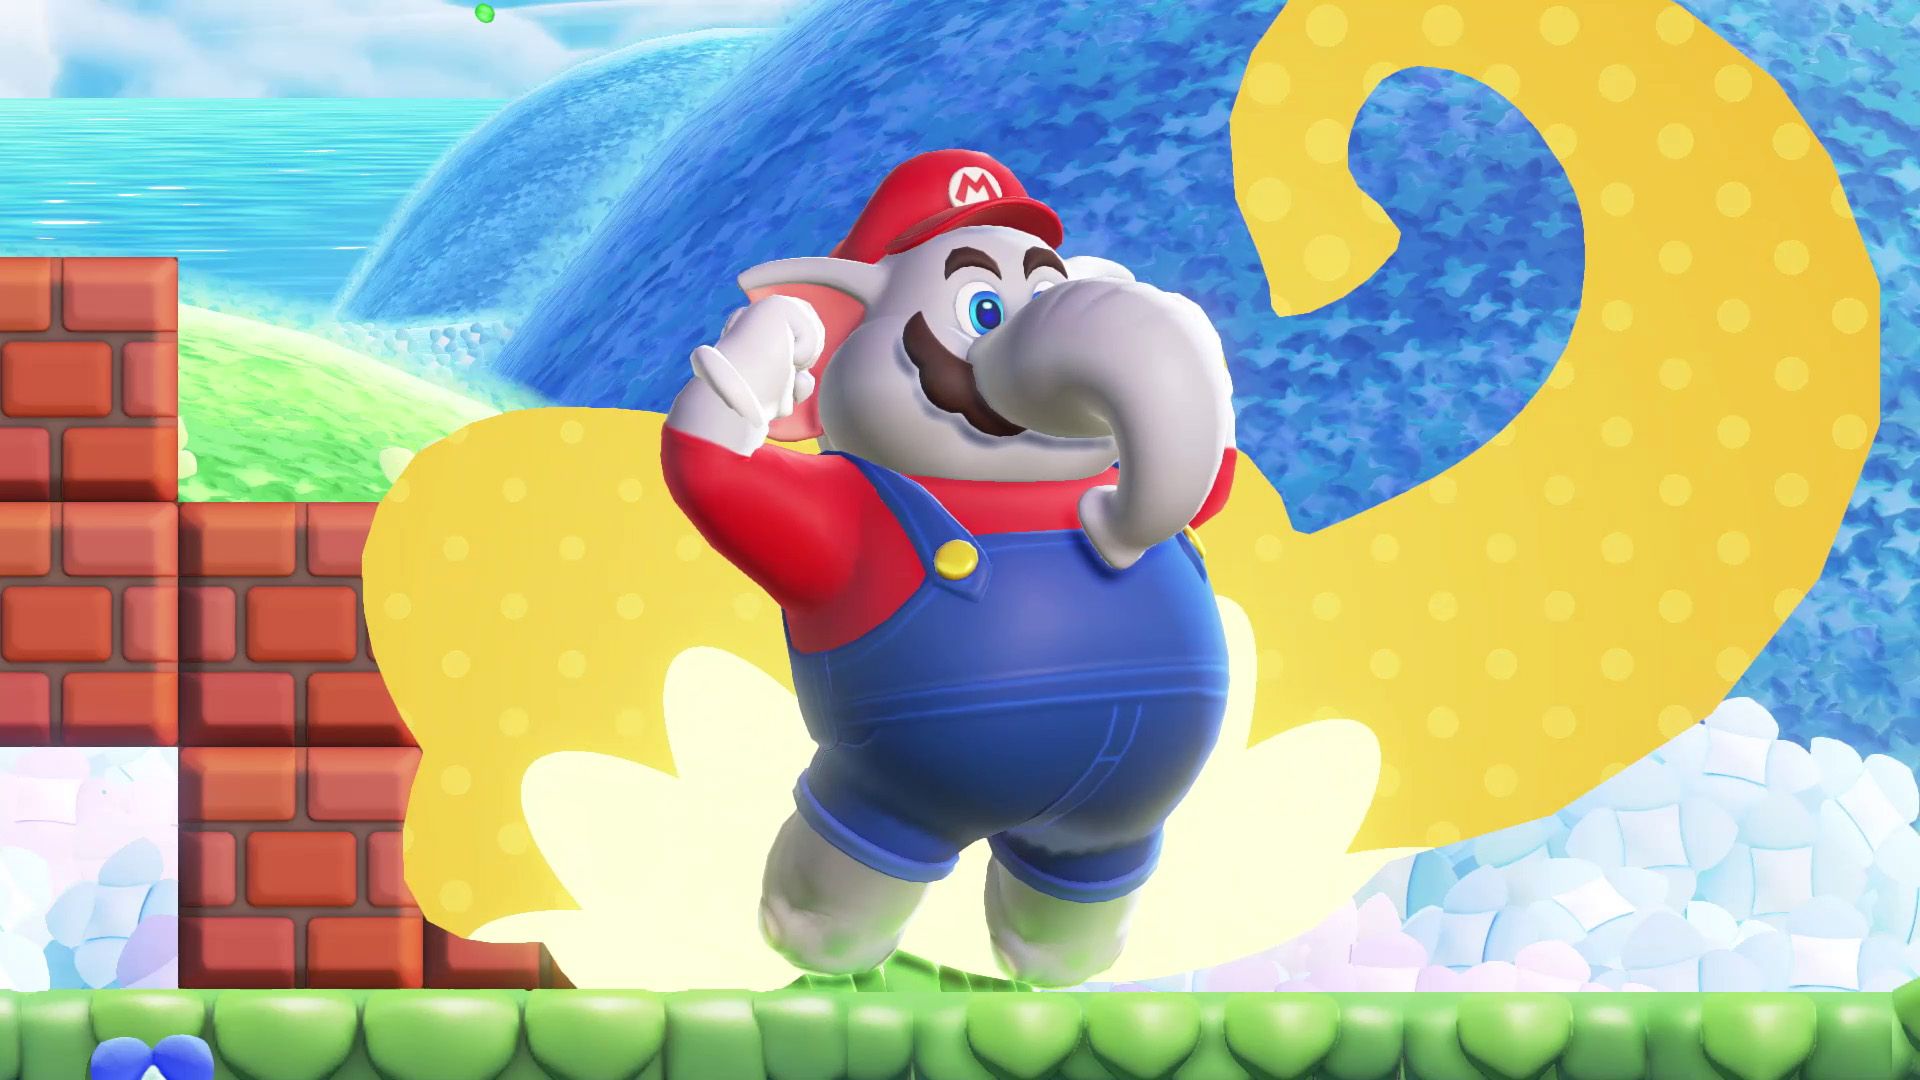 Super Bros Wonder is next Mario game for Switch